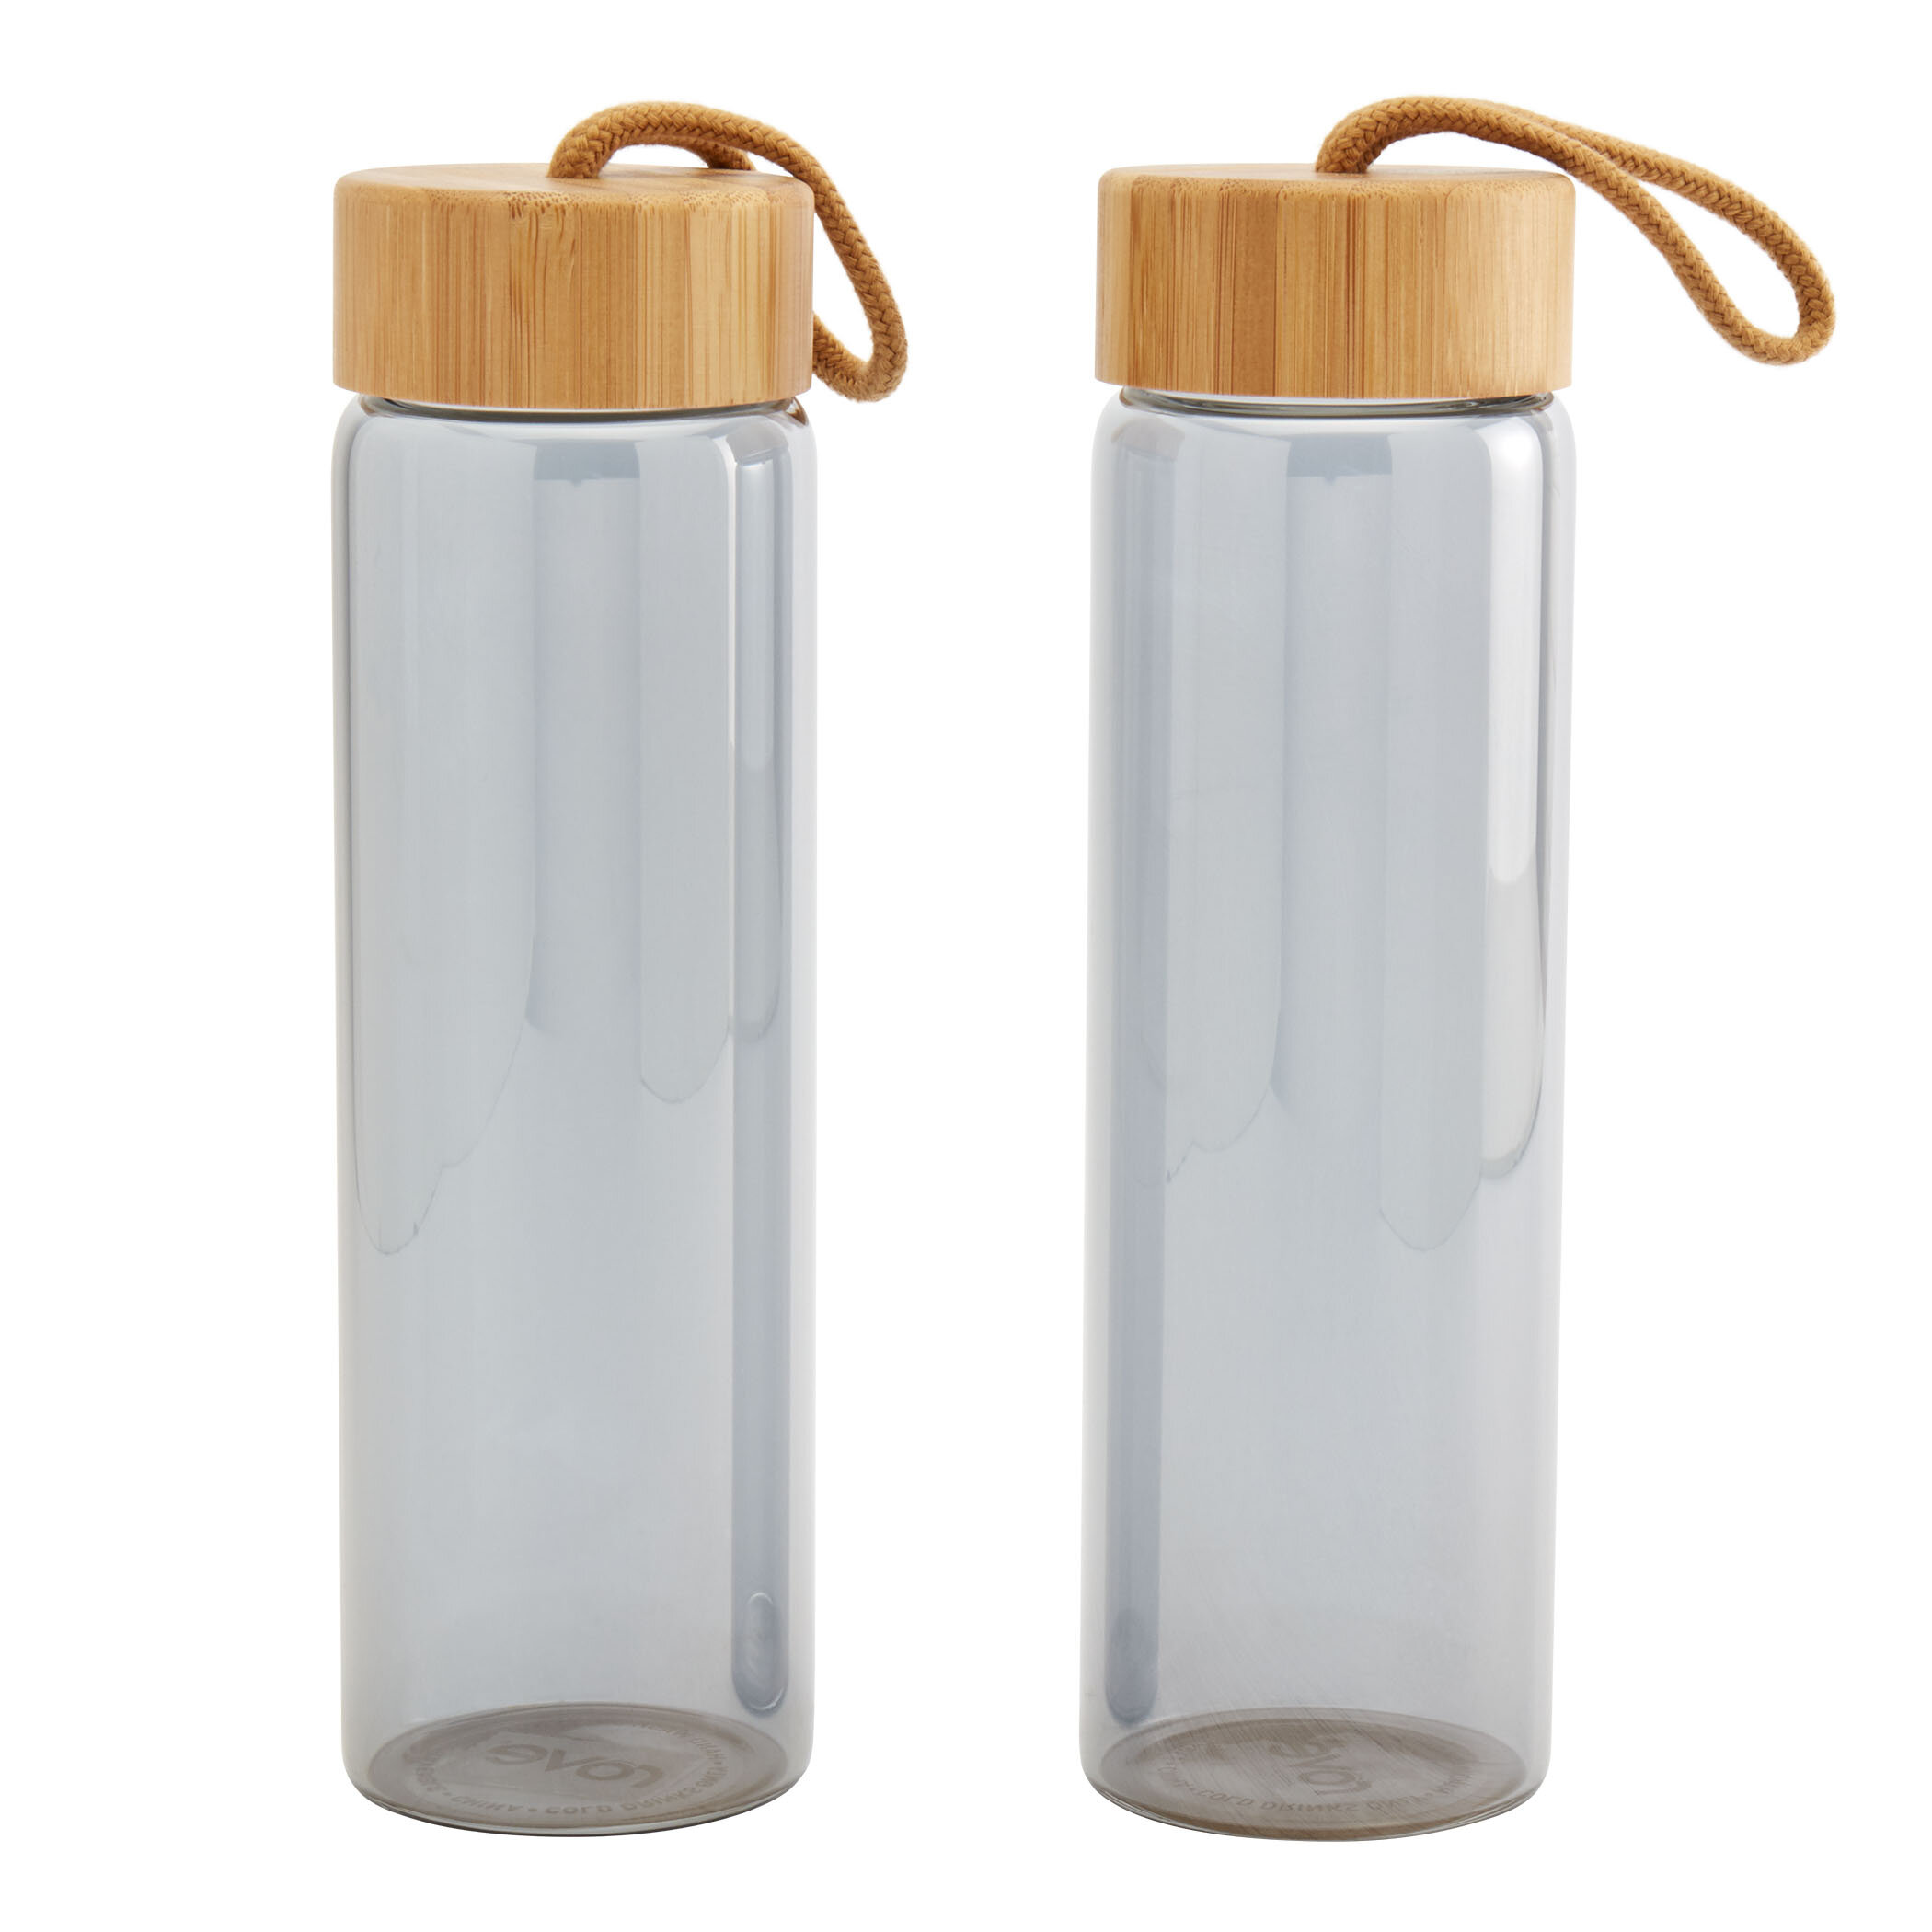 Rove 23oz Gunmetal Mirror Mirror Borosilicate Glass Water Bottle - Set of 2 - Grey